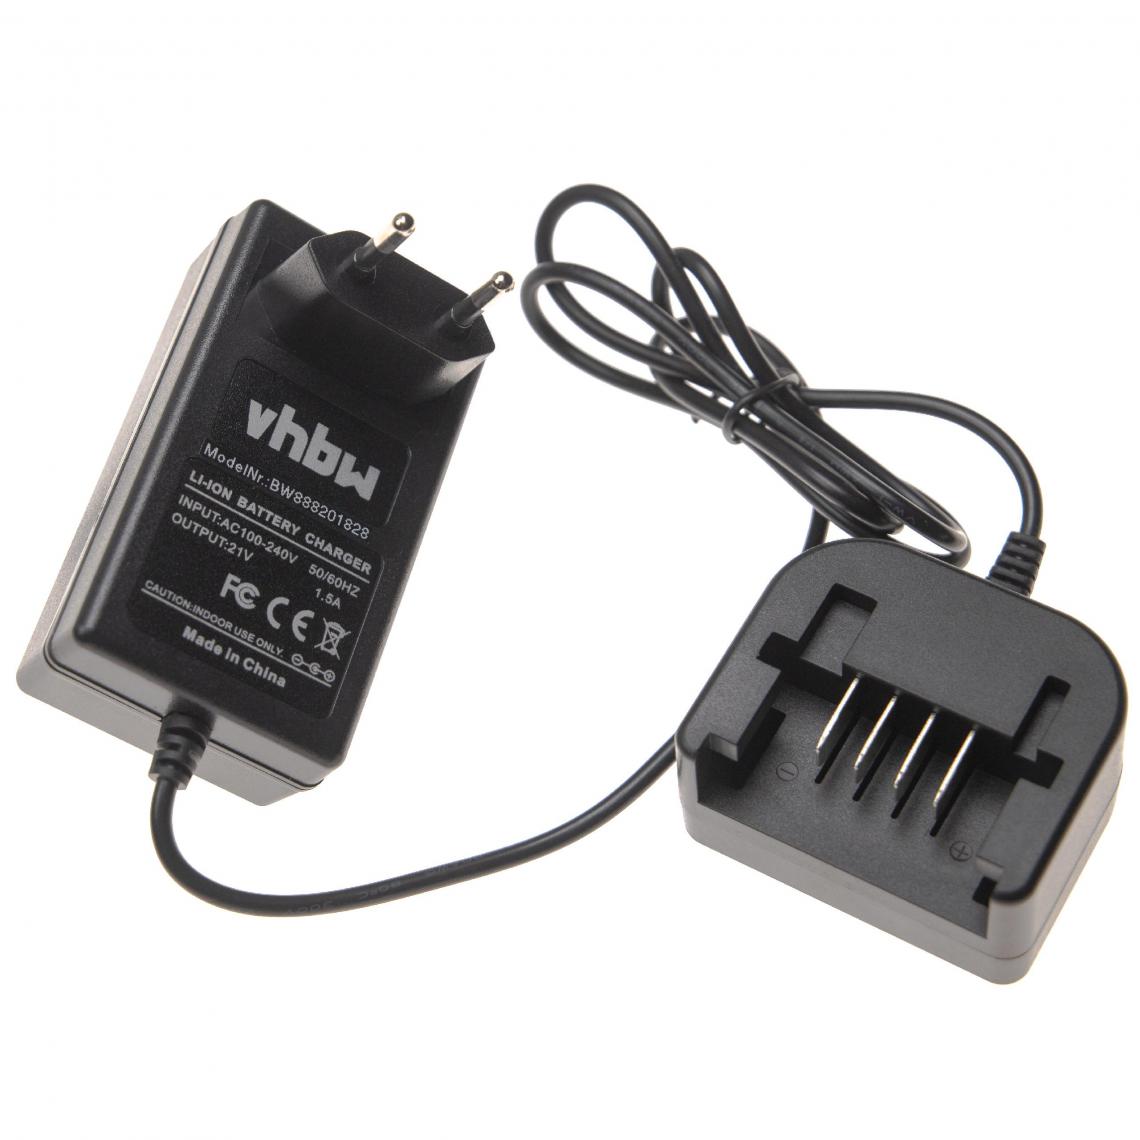 Vhbw - vhbw Chargeur compatible avec Worx WG157, WG157E, WG157E.9, WG160, WG160.1, WG160.2, WG160.3, WG160.4, WG160E batteries Li-ion d'outils (20V) - Clouterie